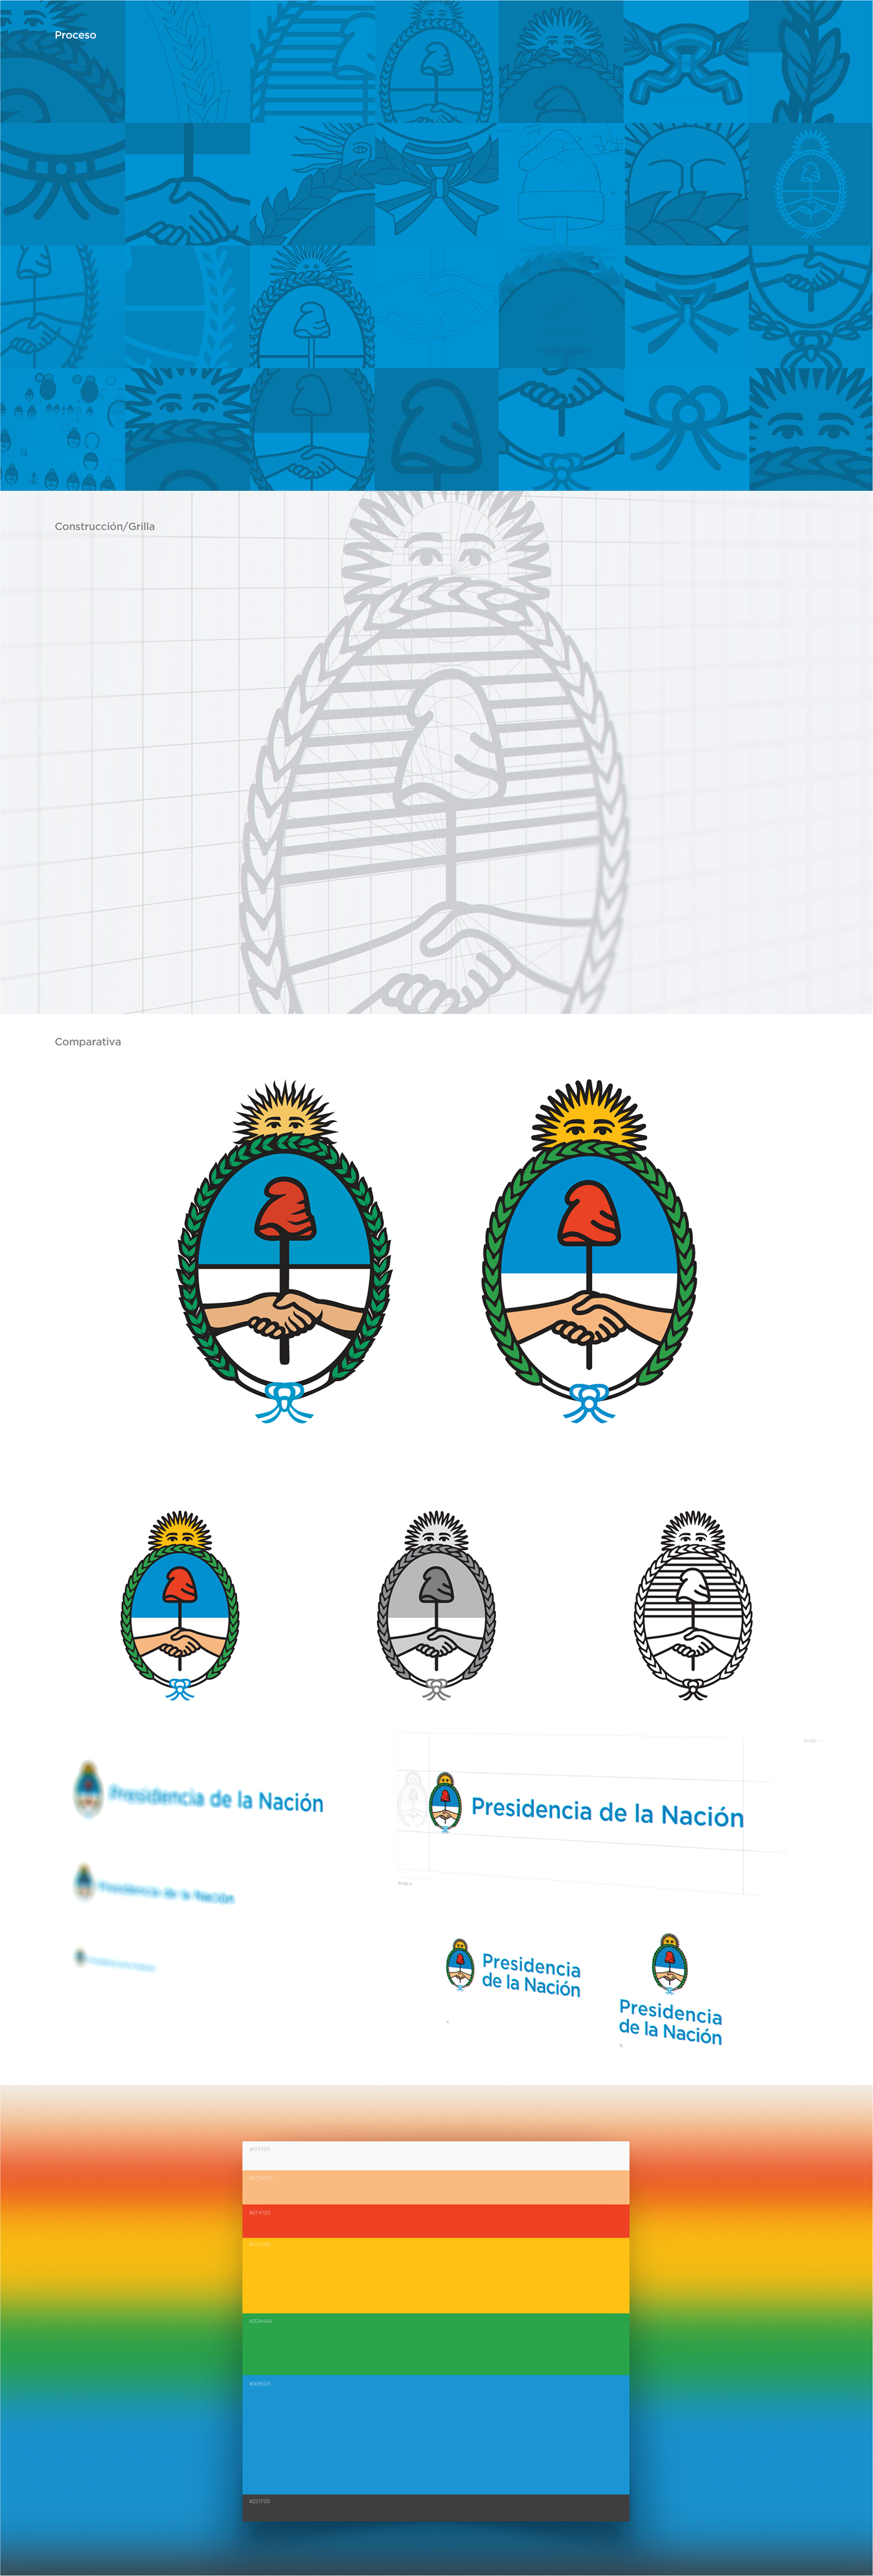 argentina logo escudo emblem redesign coat arms flat country brand